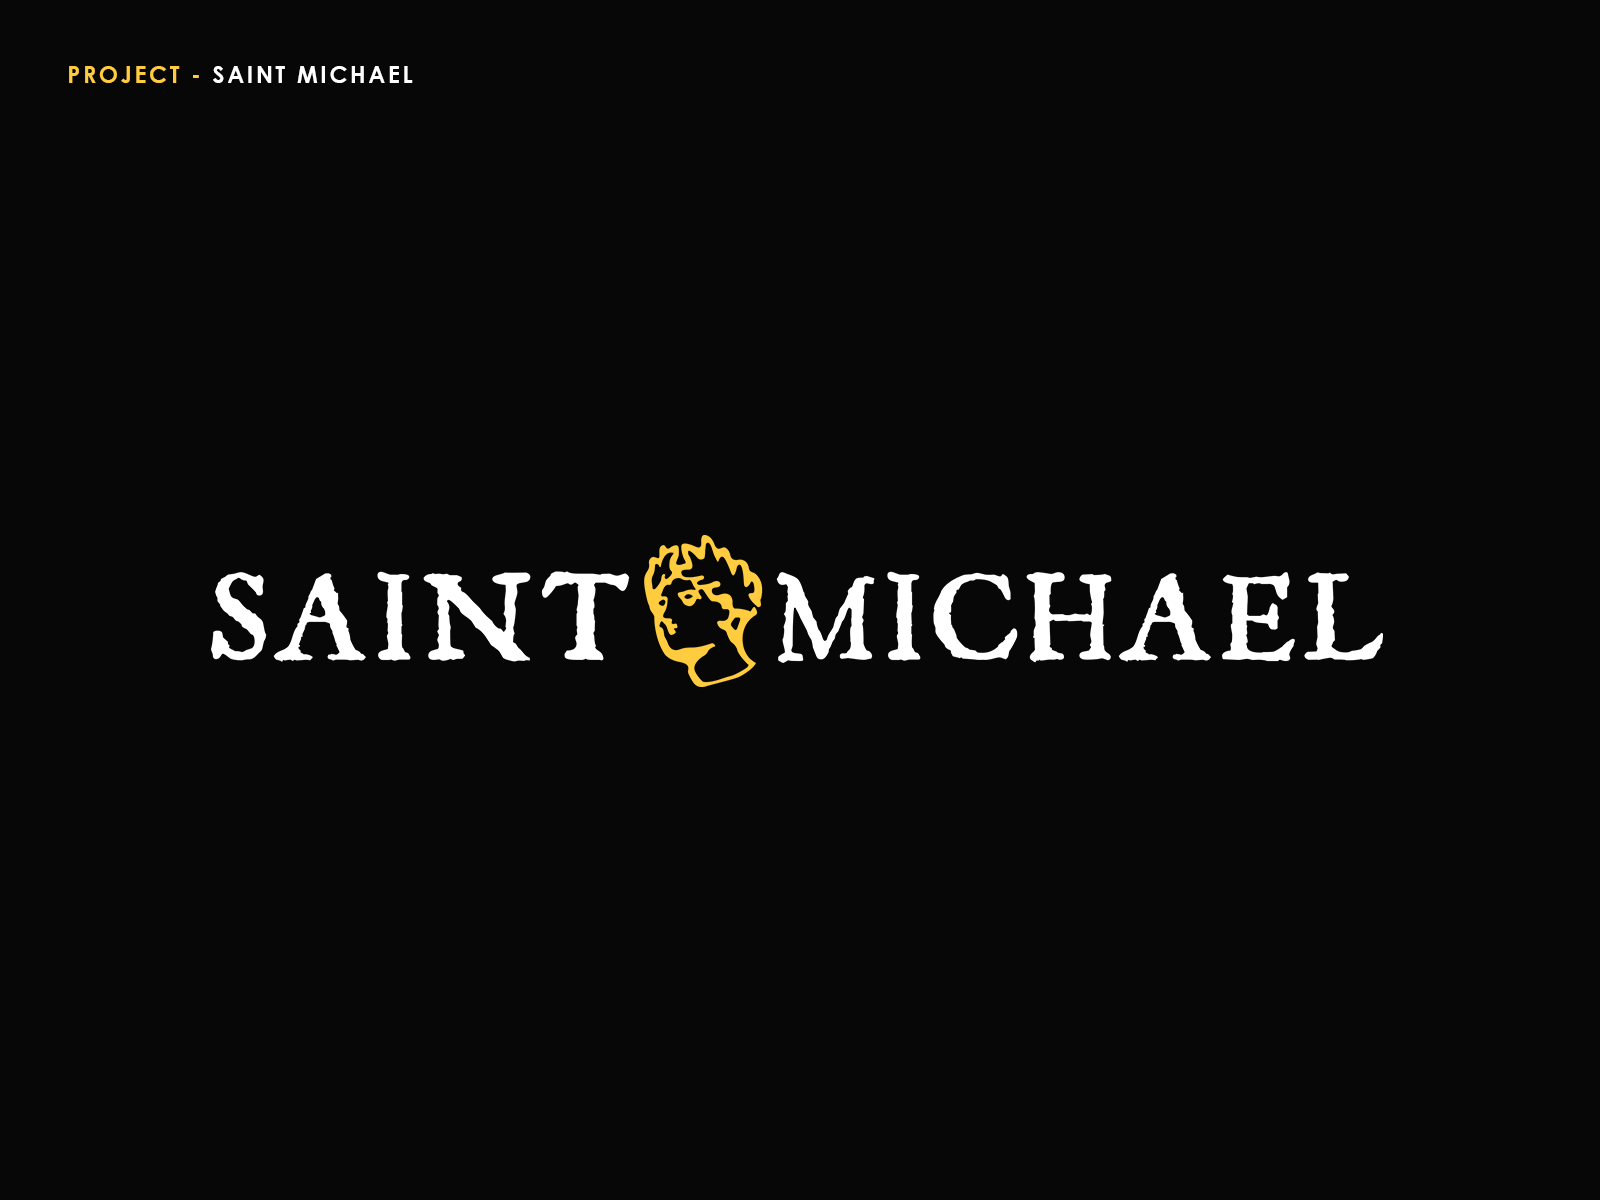 Saint Michael Logo by Callum Weiss on Dribbble